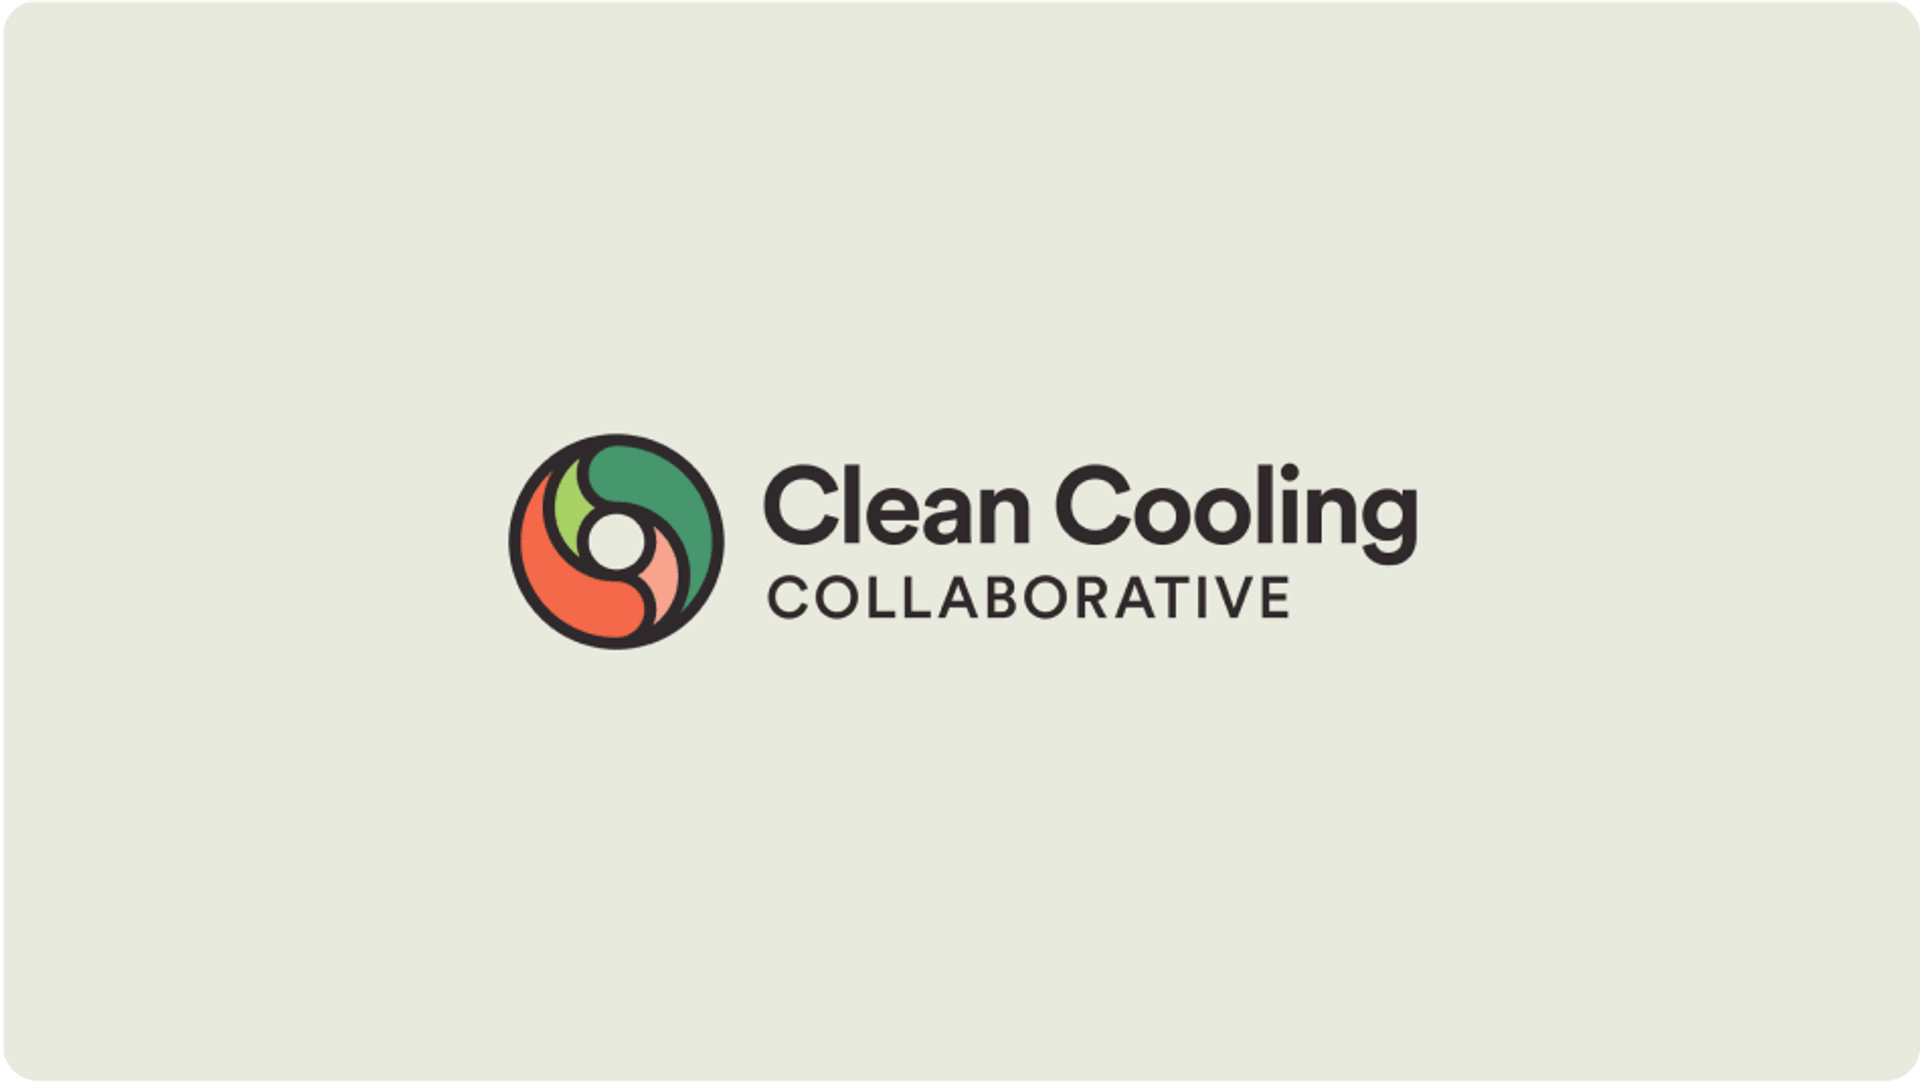 Clean Cooling Collaborative Design Asset